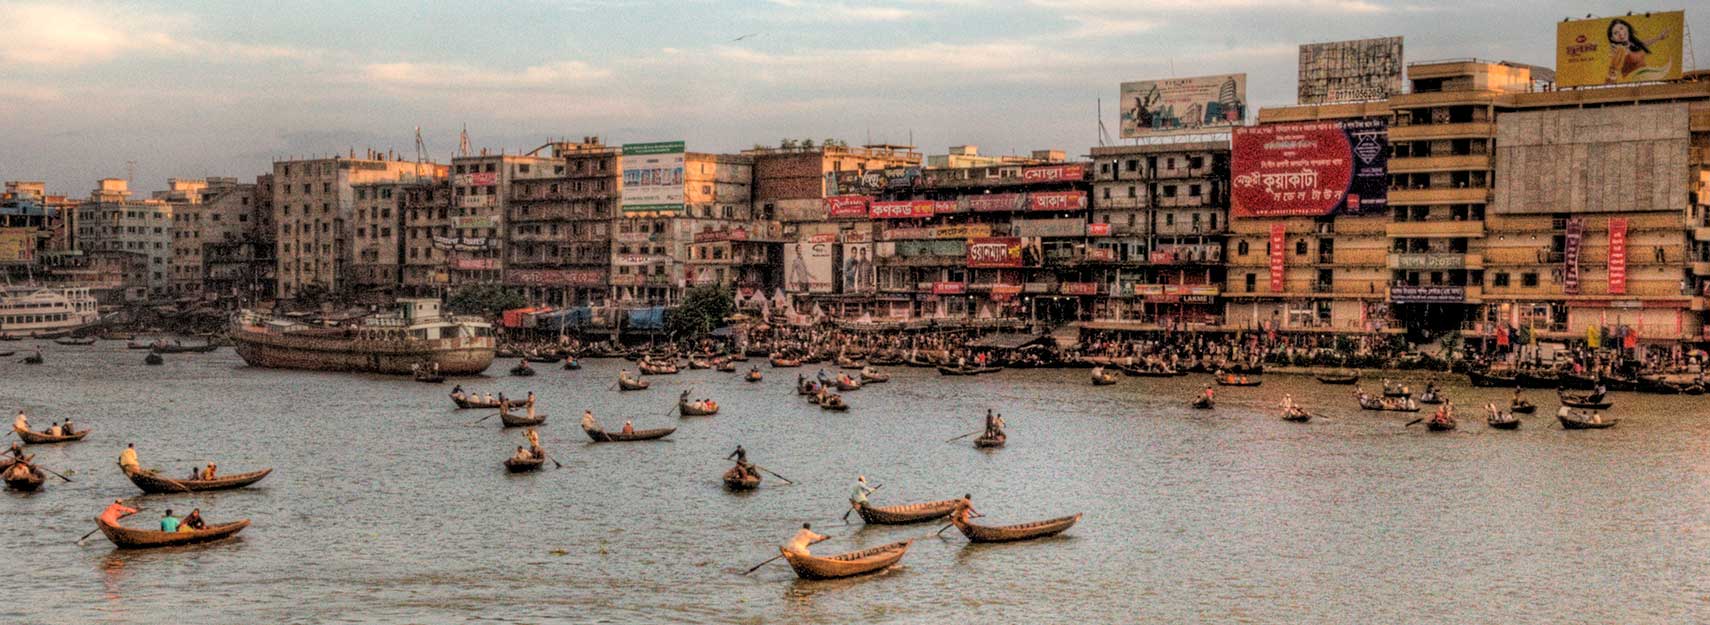 Sadarghat, one of the main ports of Dhaka